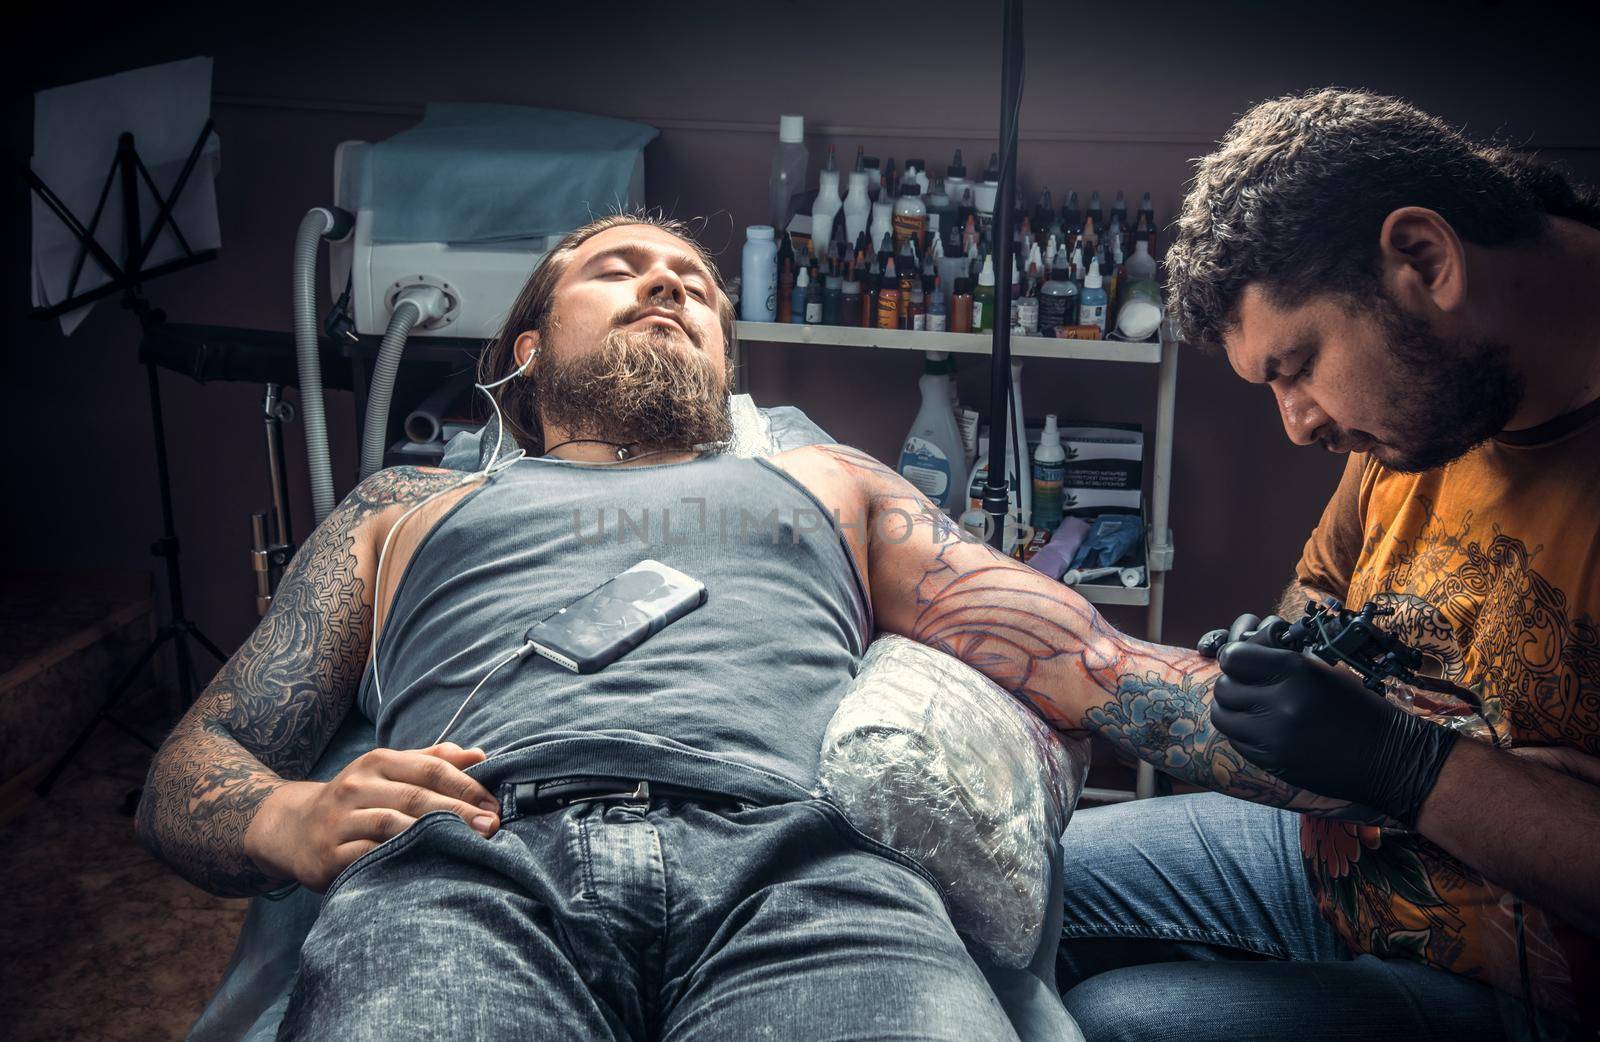 Tattoo artist create tattoo in studio./Professional tattoo artist makes tattoo pictures in tattoo studio.